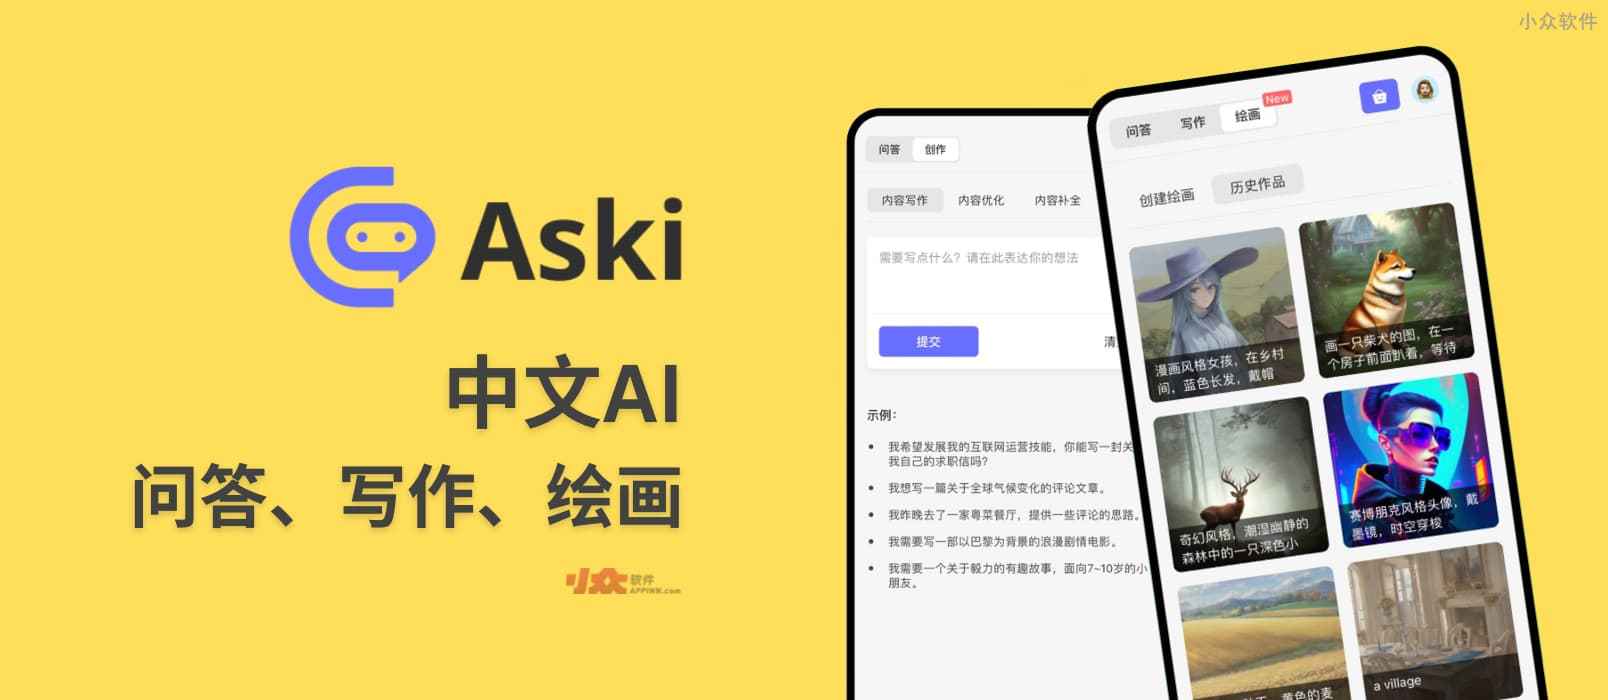 Aski AI – 中文 AI 问答、写作、绘画工具[by 善用佳软]